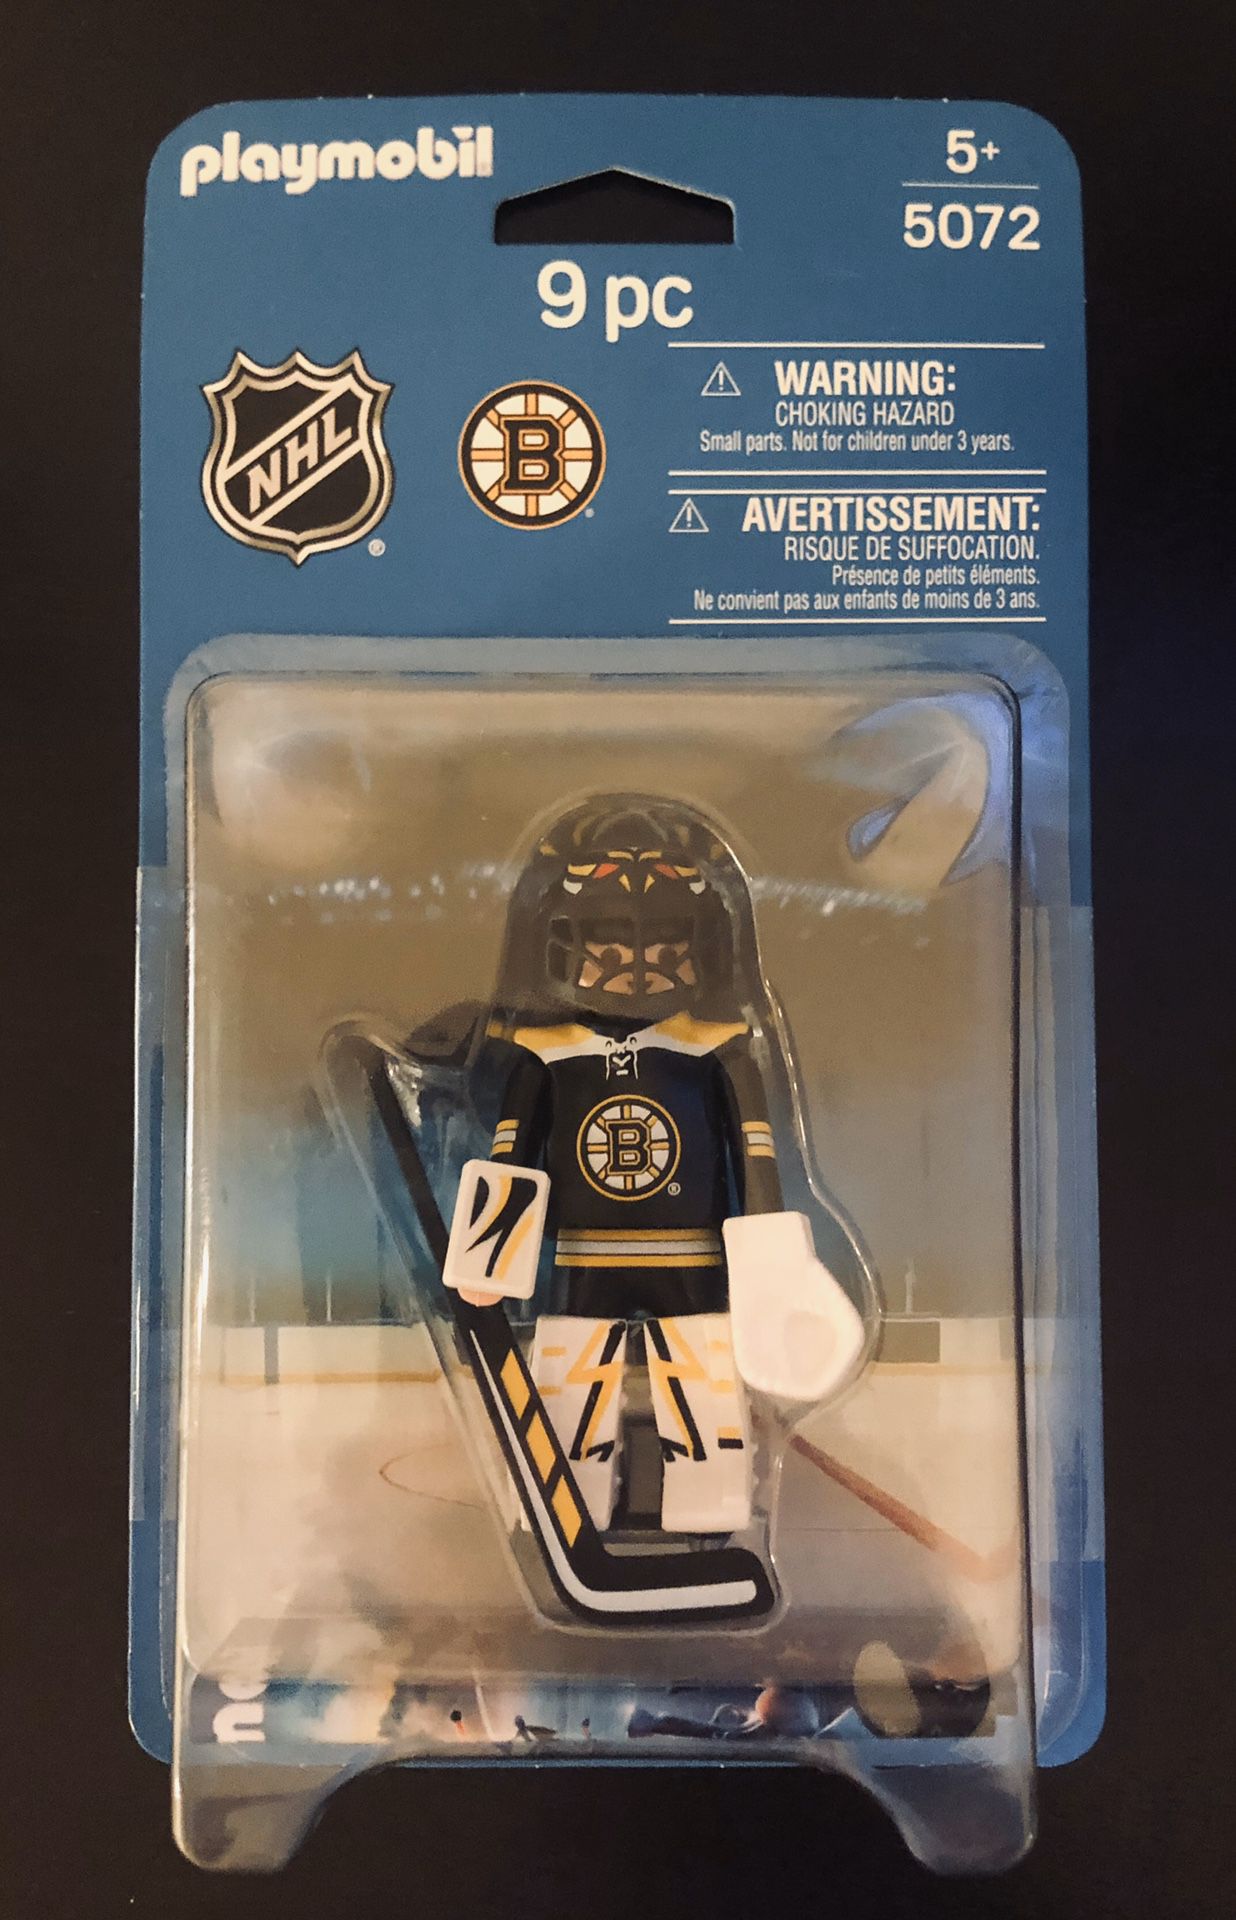 Boston Bruins NHL Hockey Playmobil 9 Pc Toy Action Figure Goalie - BRAND NEW!